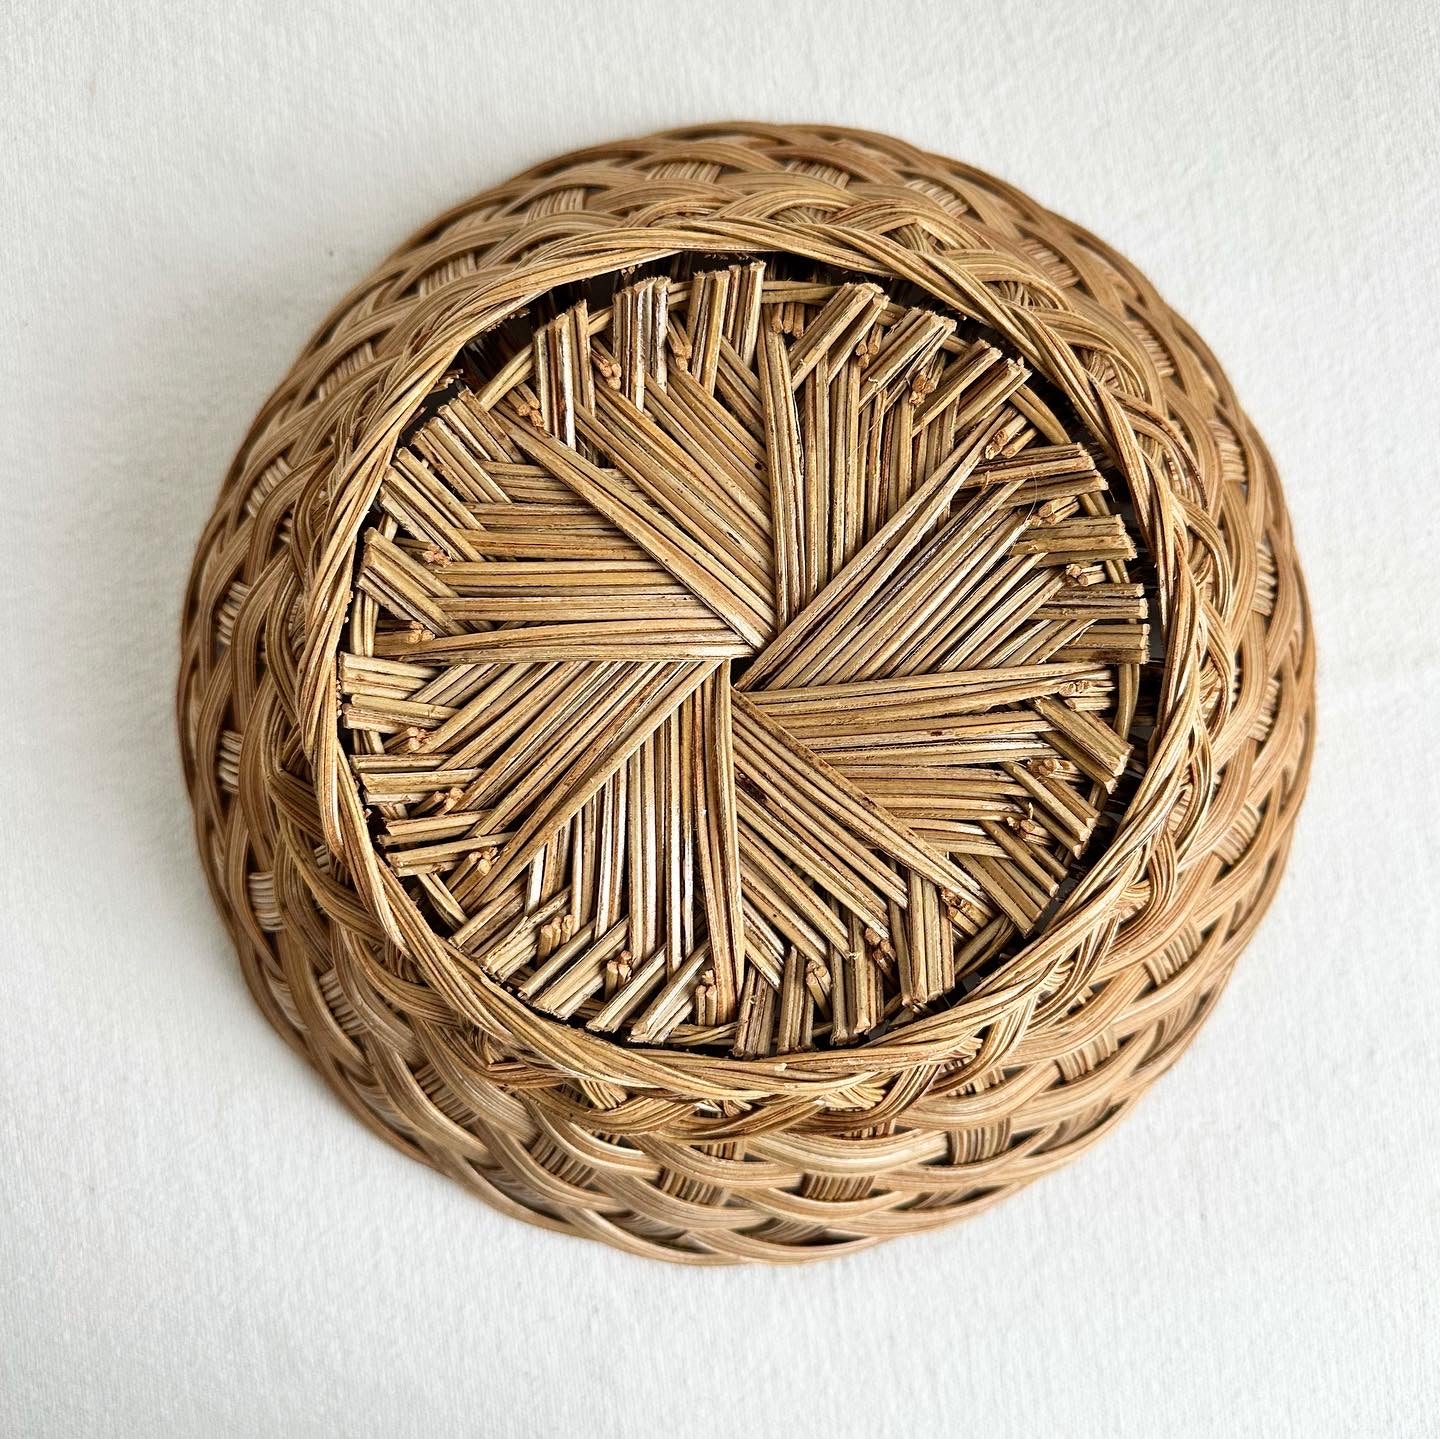 Philippine Coconut Midrib Basket